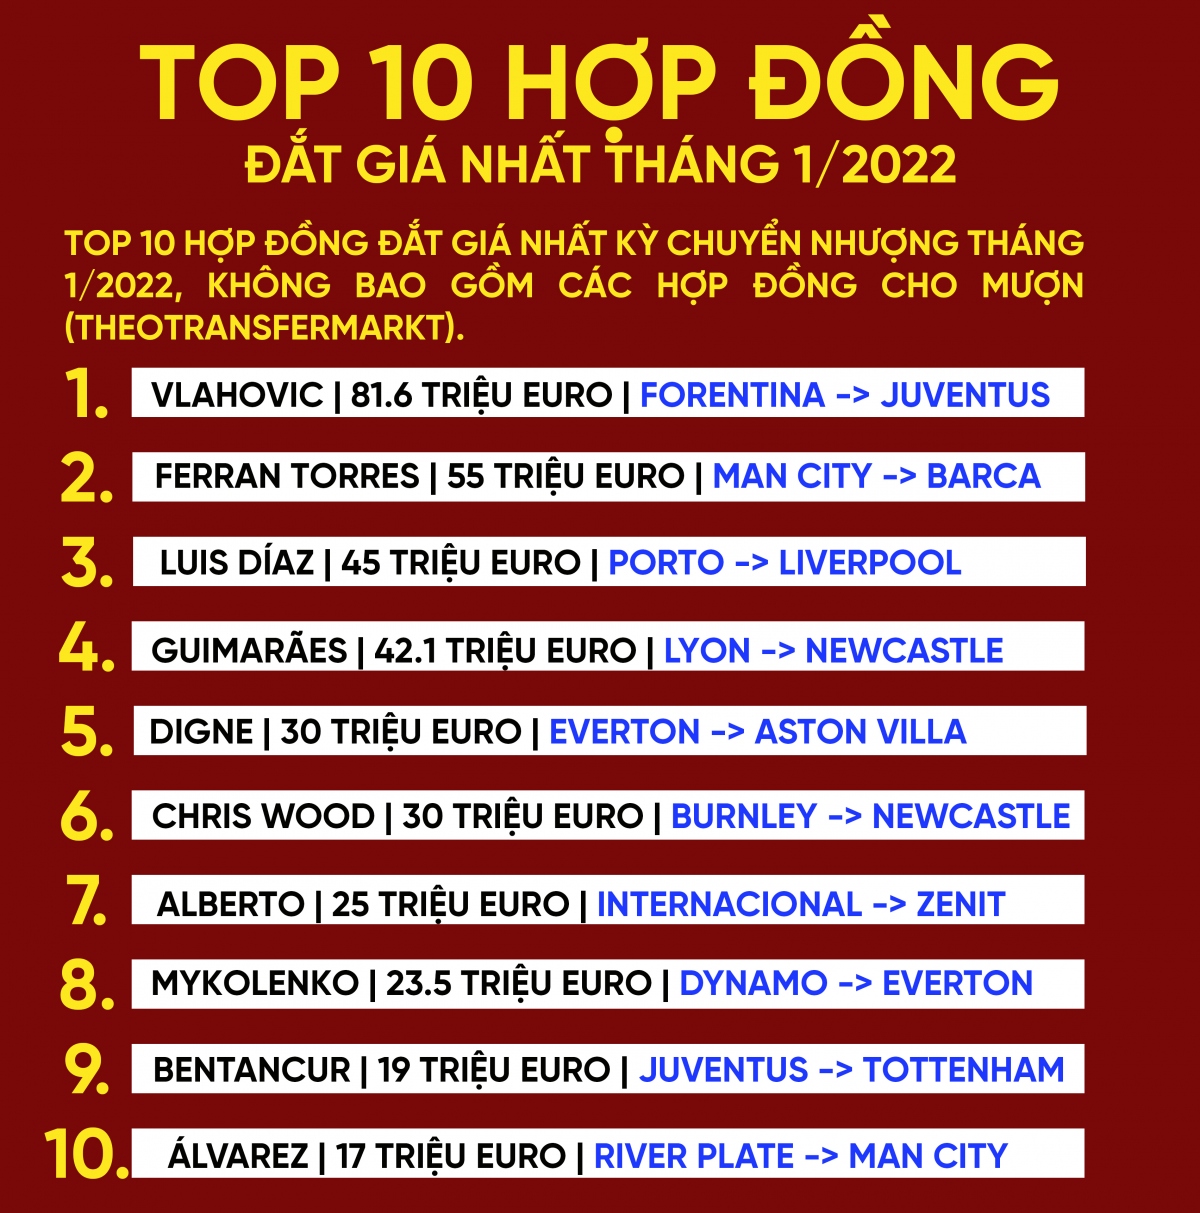 top 10 hop dong dat gia nhat thang 1 2022 hinh anh 1